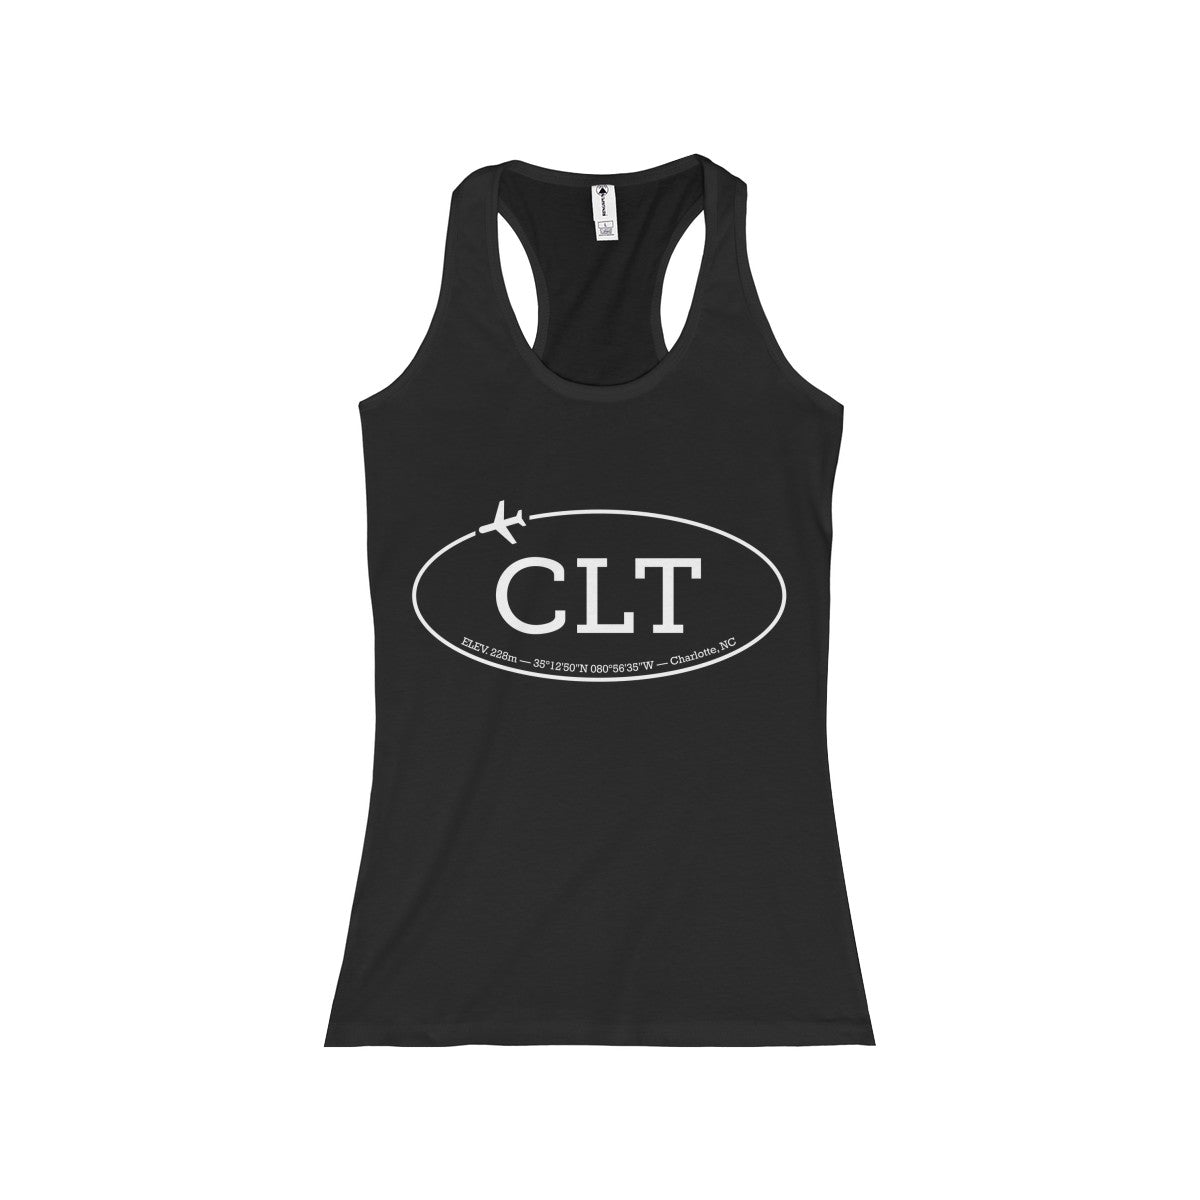 CLT Local - Women's Racerback Tank